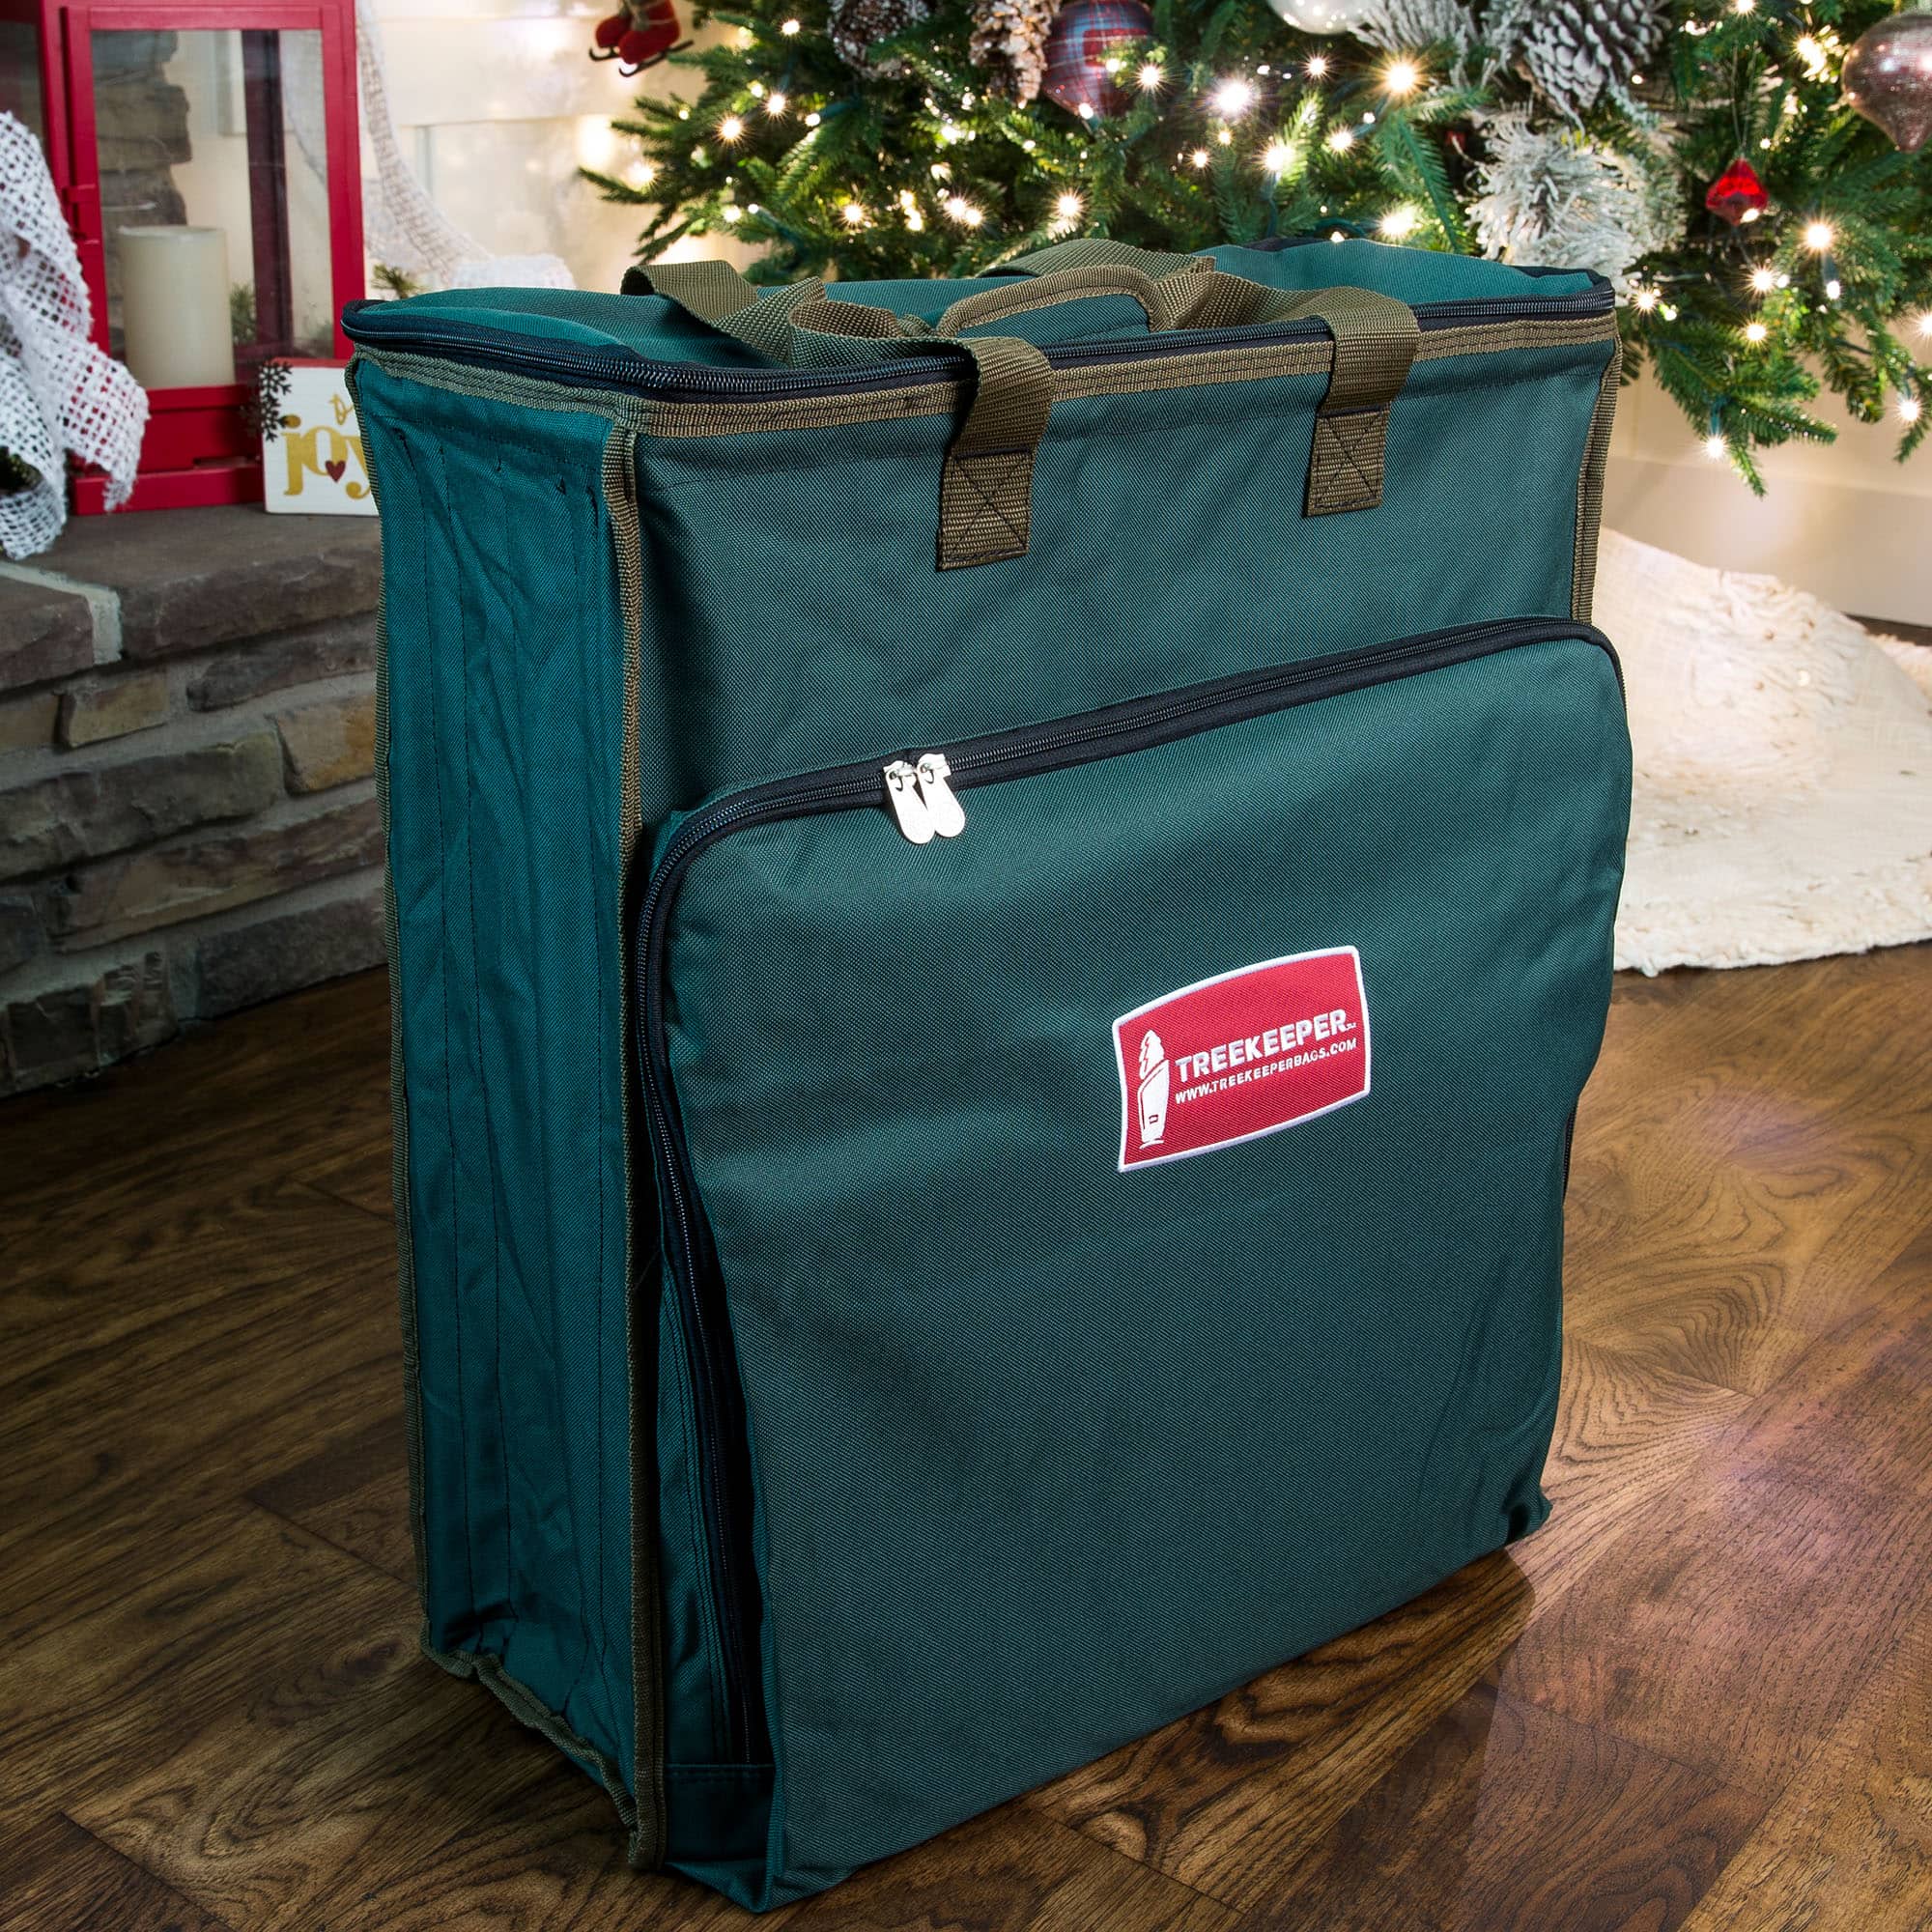 Christmas Ornament Storage Bag For Sale - TreeKeeperBag